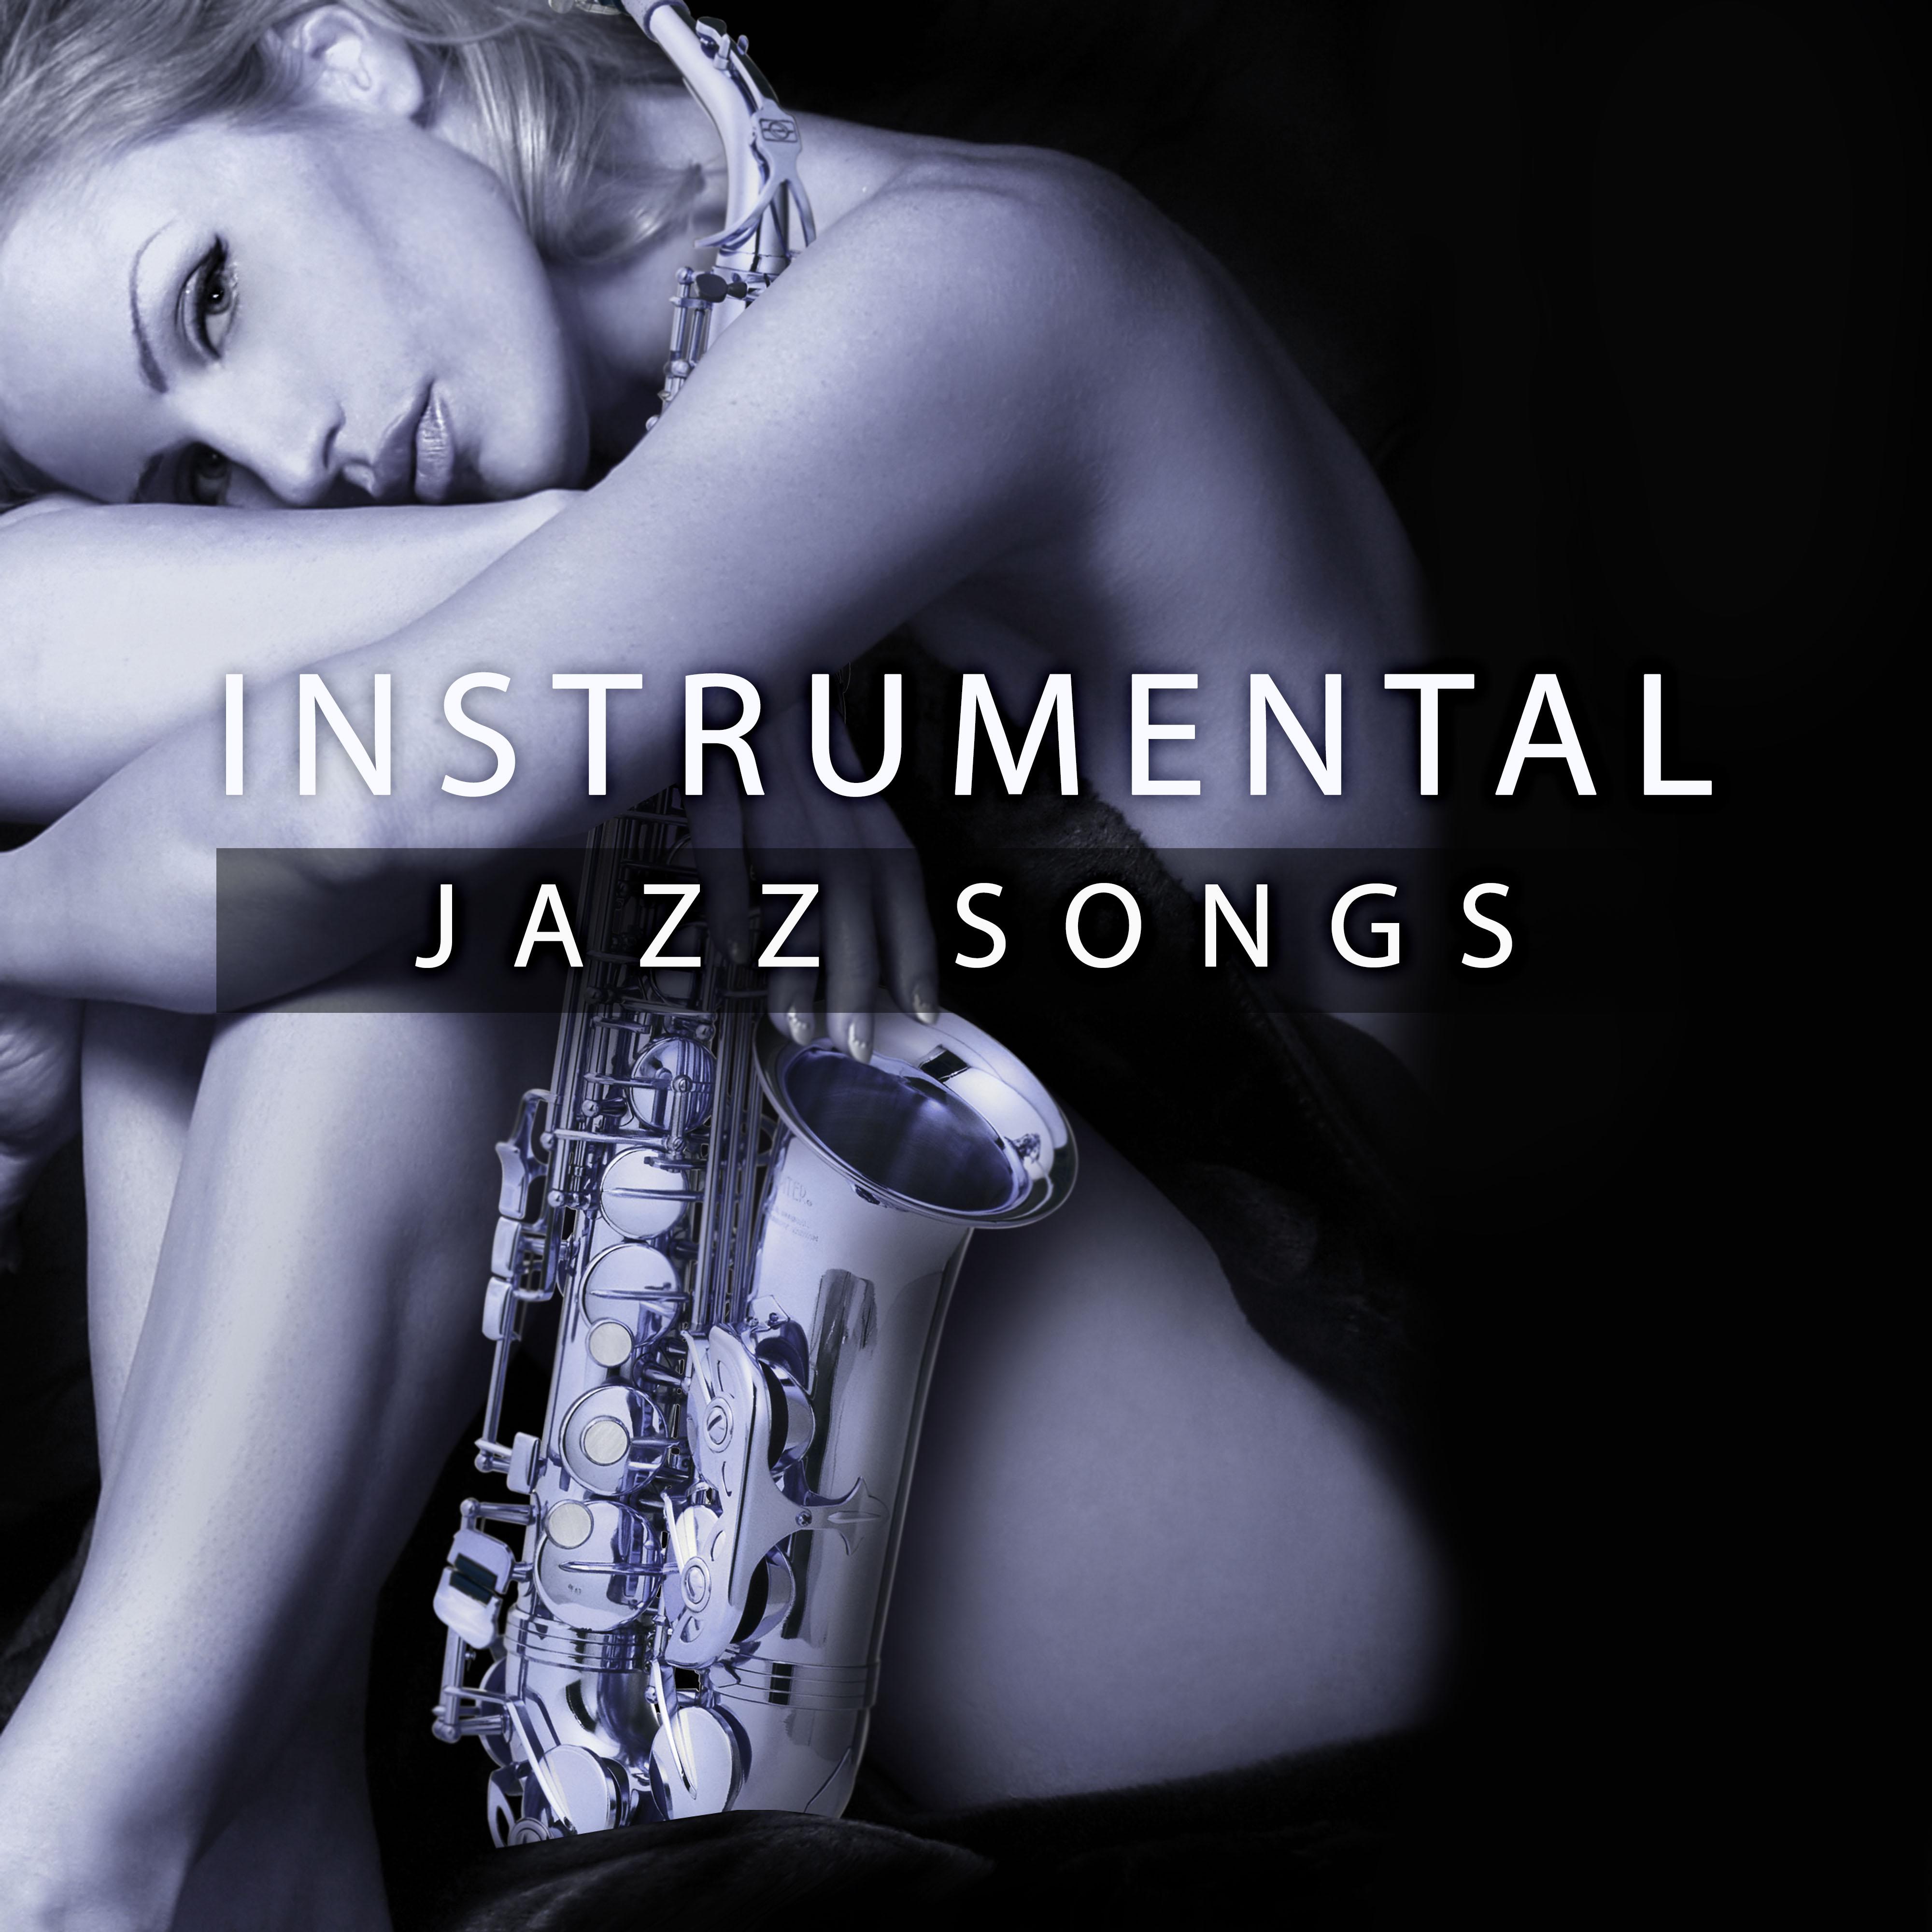 Instrumental Jazz Songs - Romantic Love Songs, Sensual Cafe Jazz Melodies